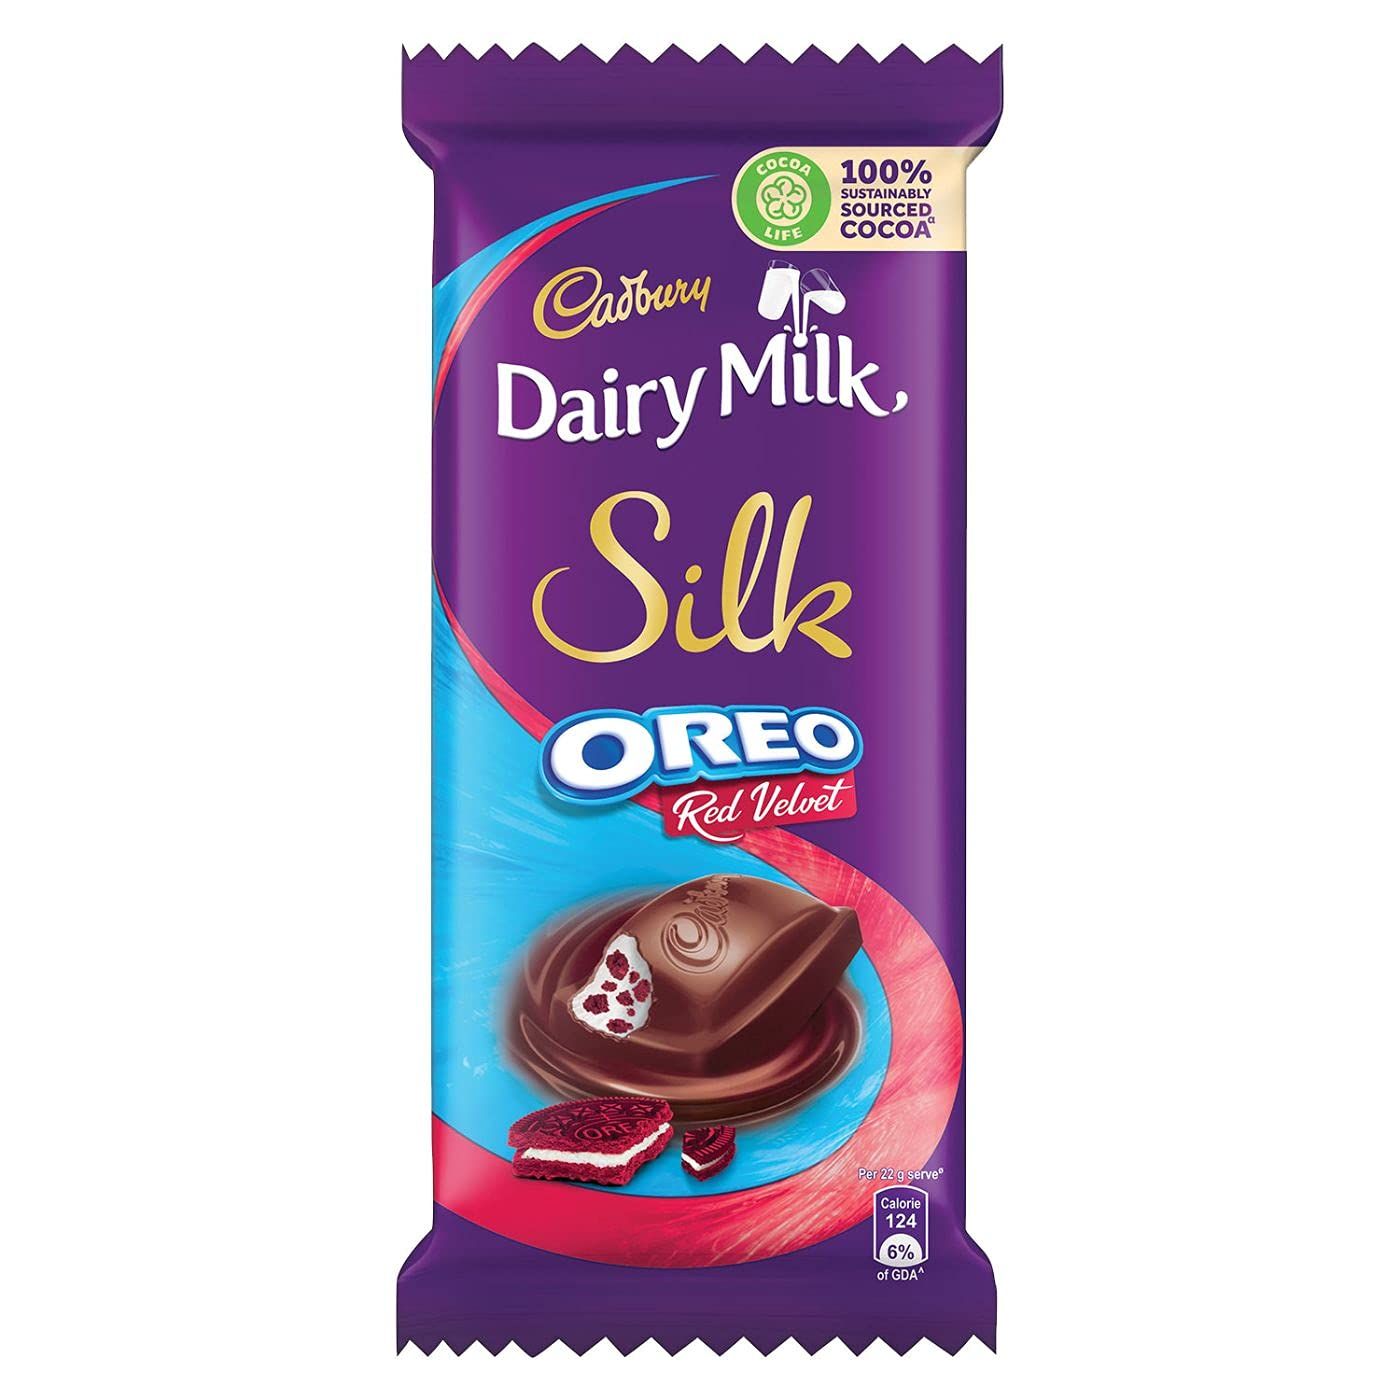 Cadbury Dairy Milk Oreo Red Velvet Image